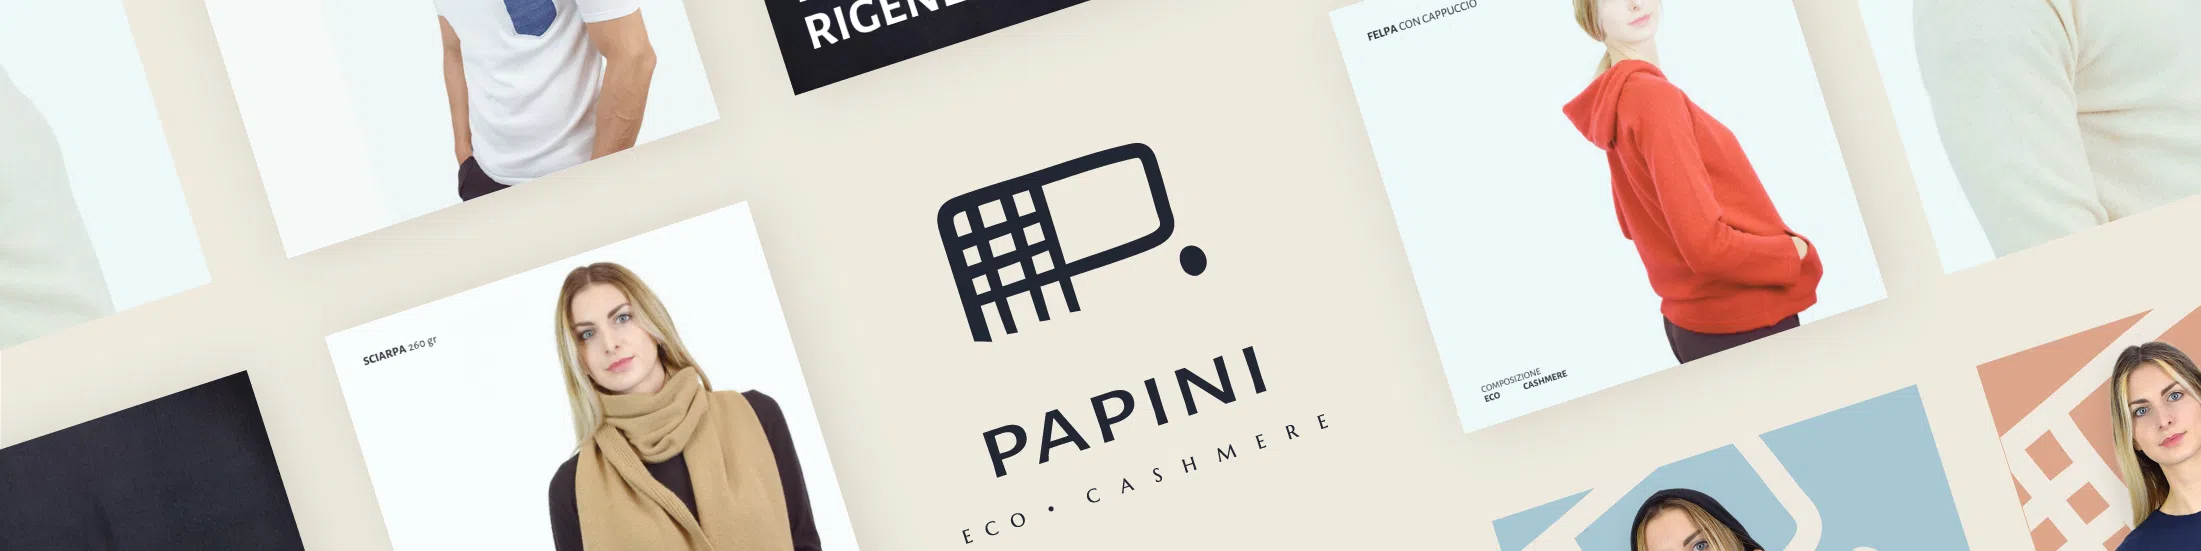 Papini Banner LinkedIN C